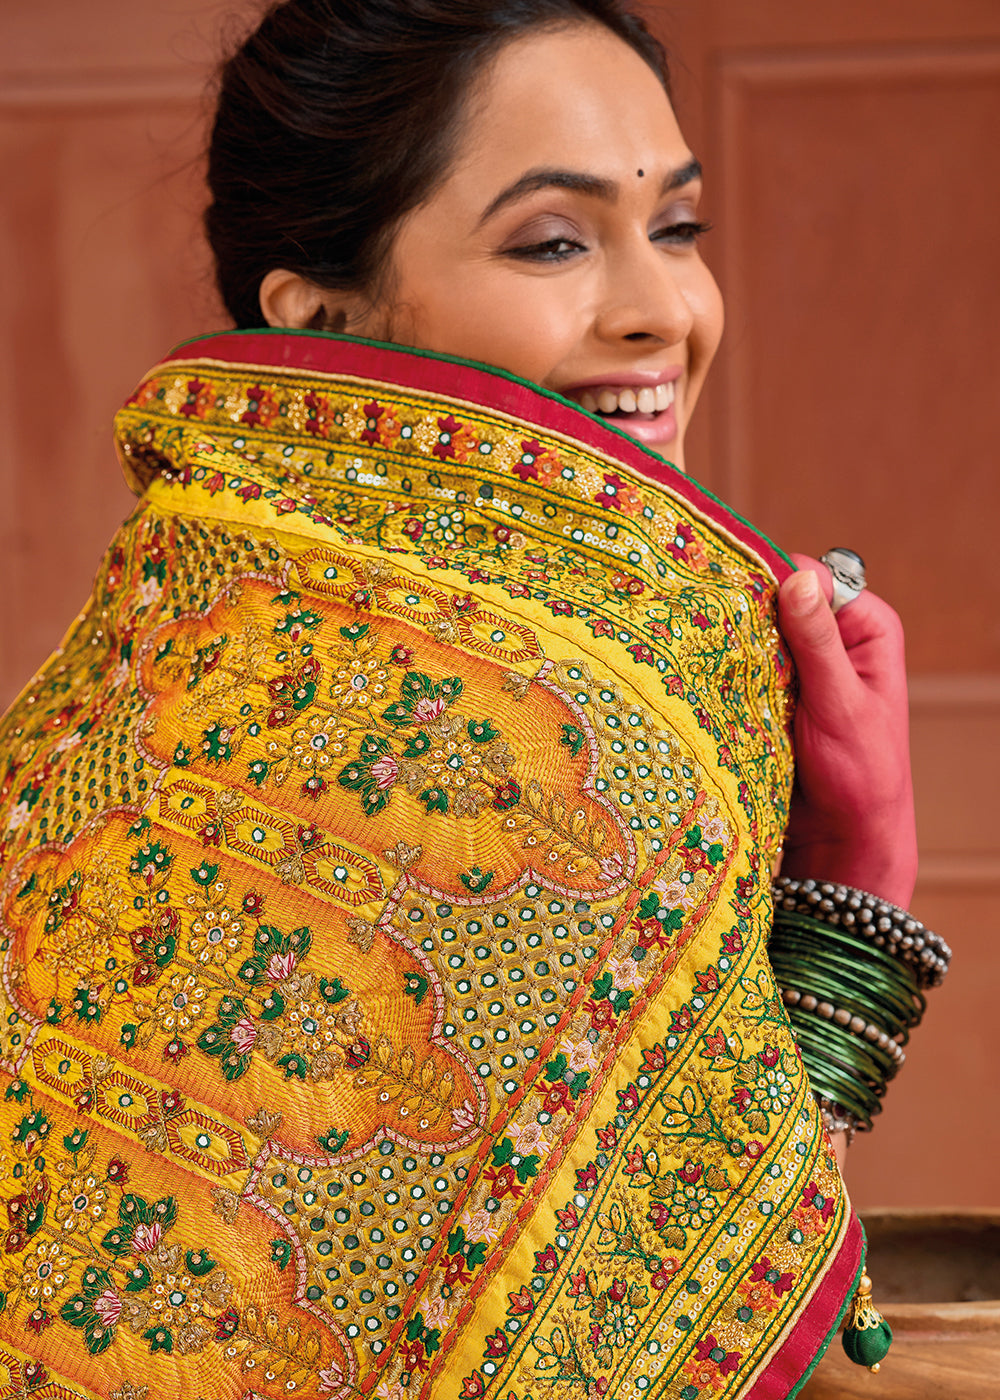 Buy Now Yellow Kachhi Work Embroidered Traditional Banarasi Saree Online in USA, UK, Canada & Worldwide at Empress Clothing.